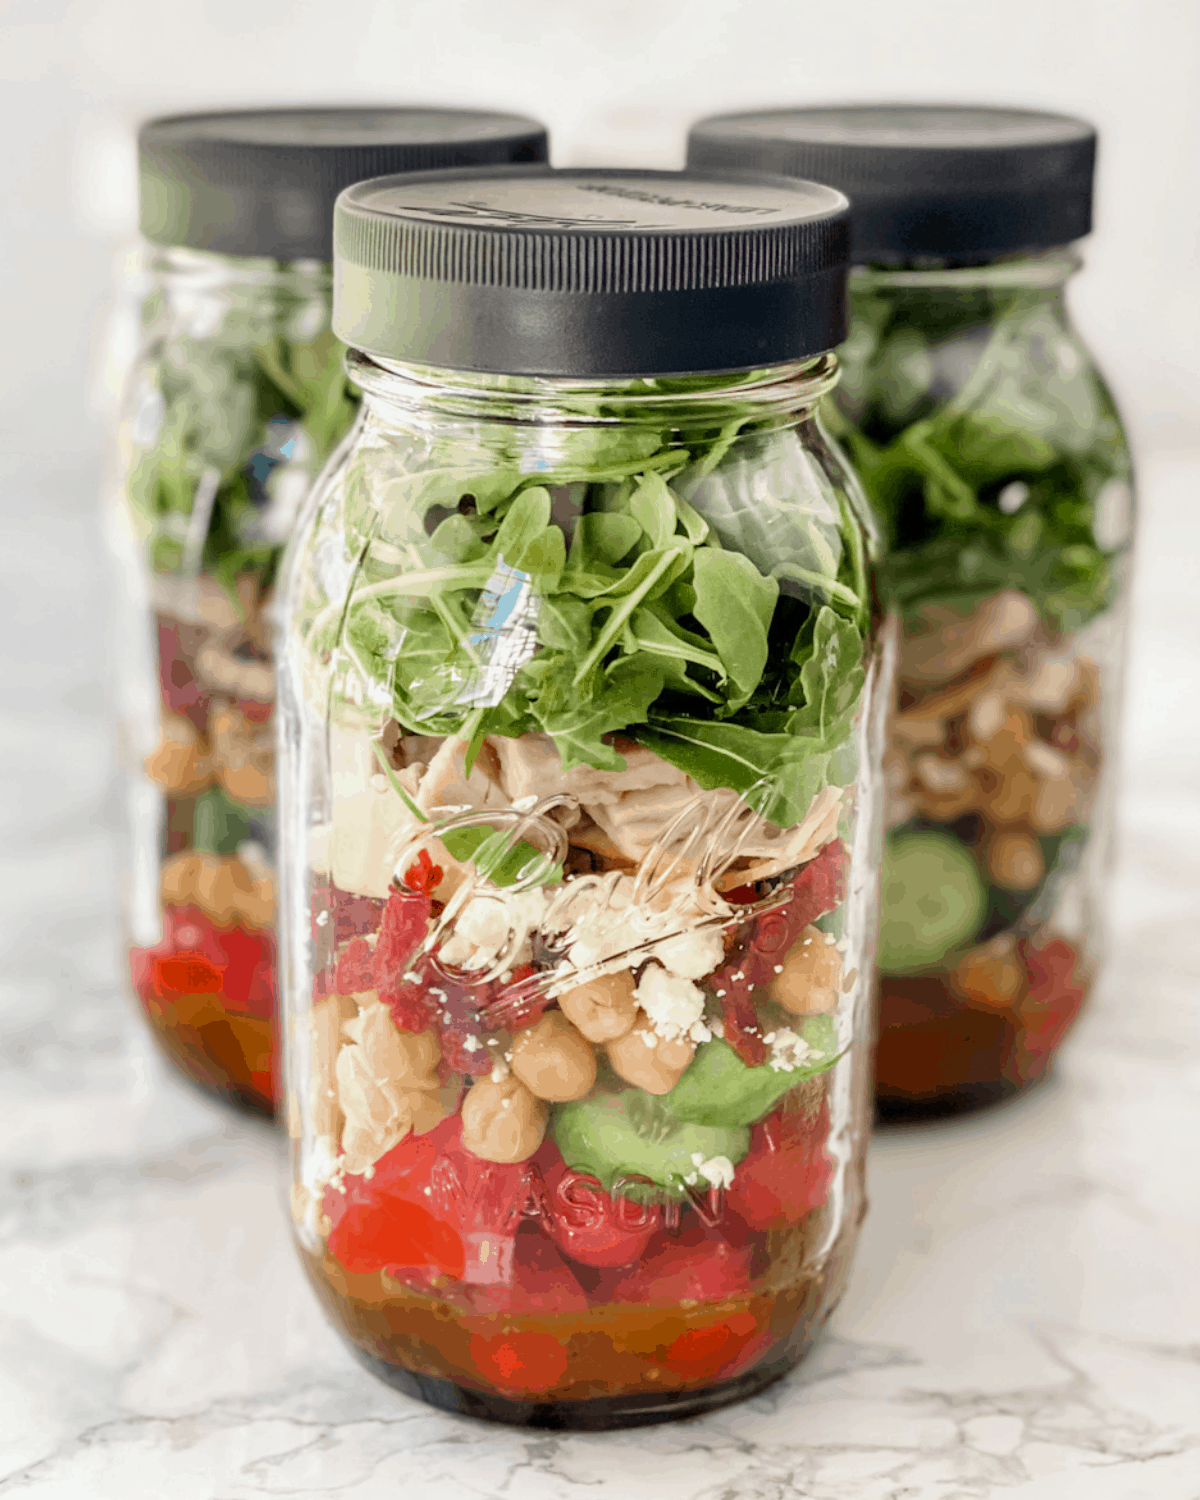 How to Make a Mason Jar Salad - California Grown